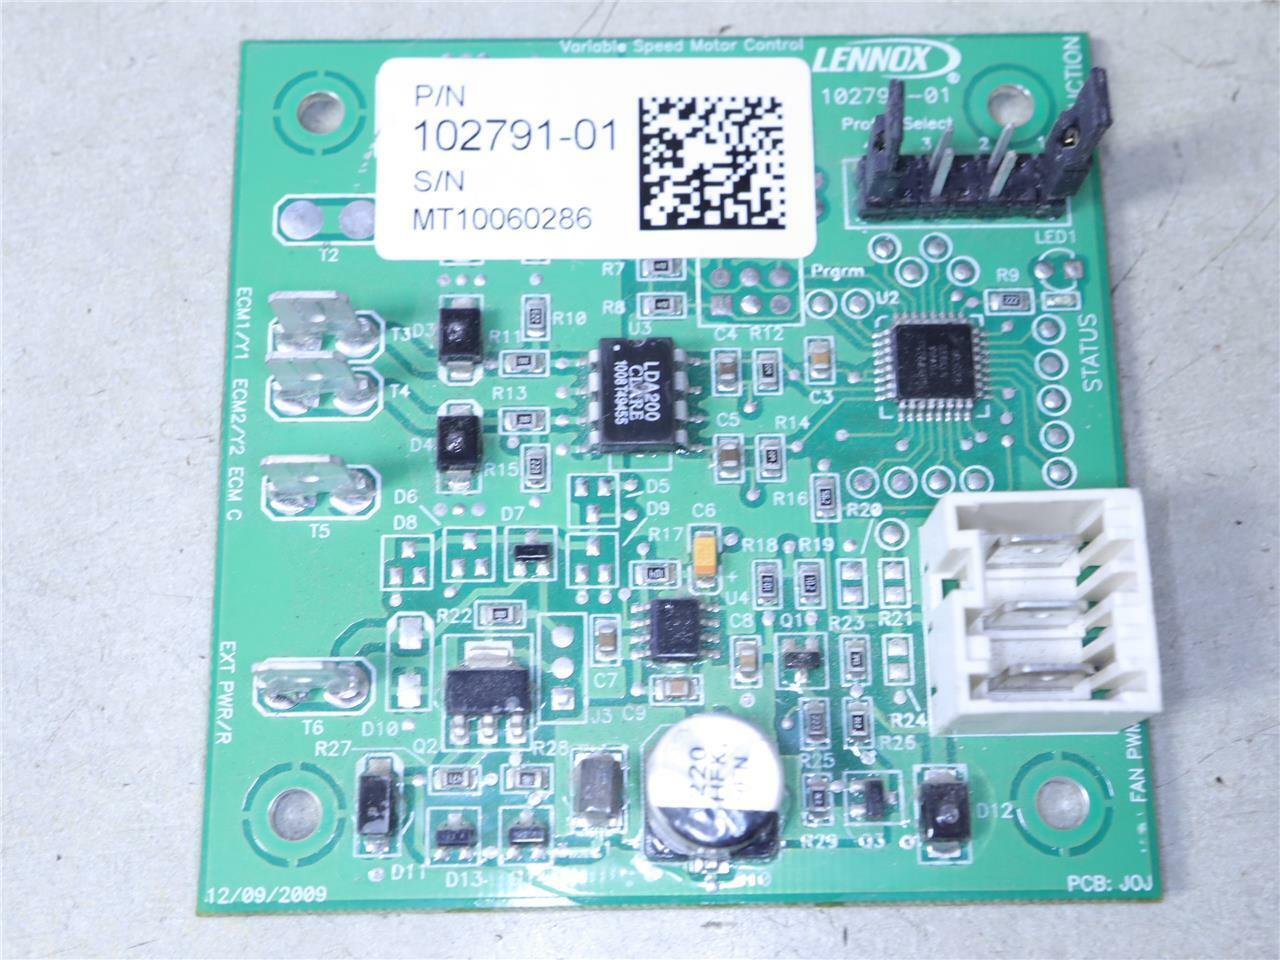 LENNOX 102791-01 Heat Pump Control Circuit Board LER495100-10